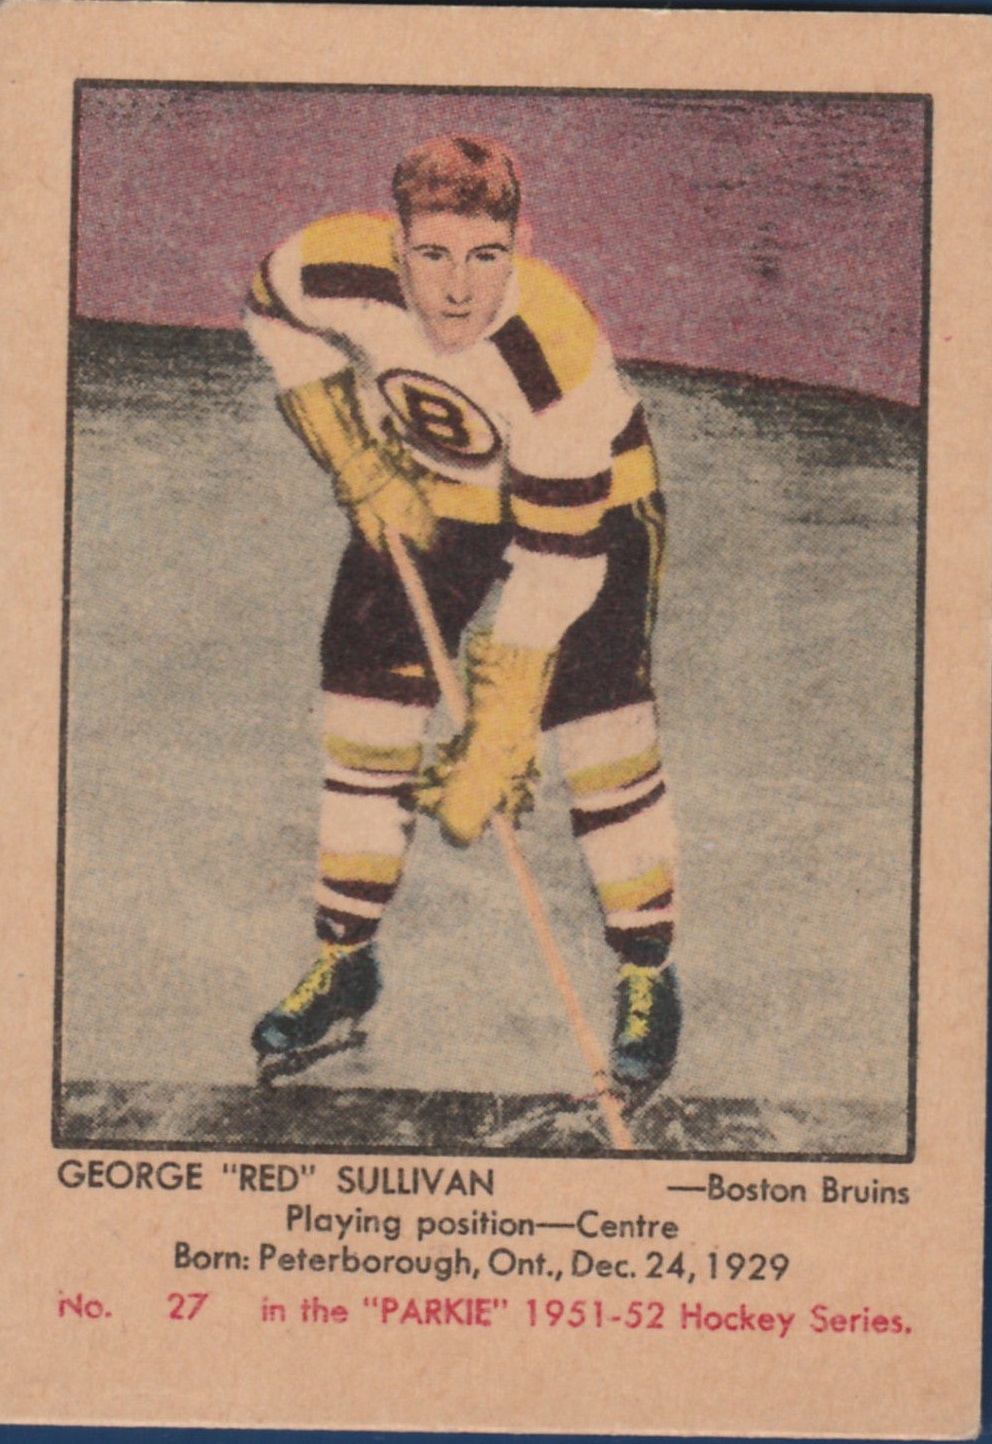  George Sullivan player image